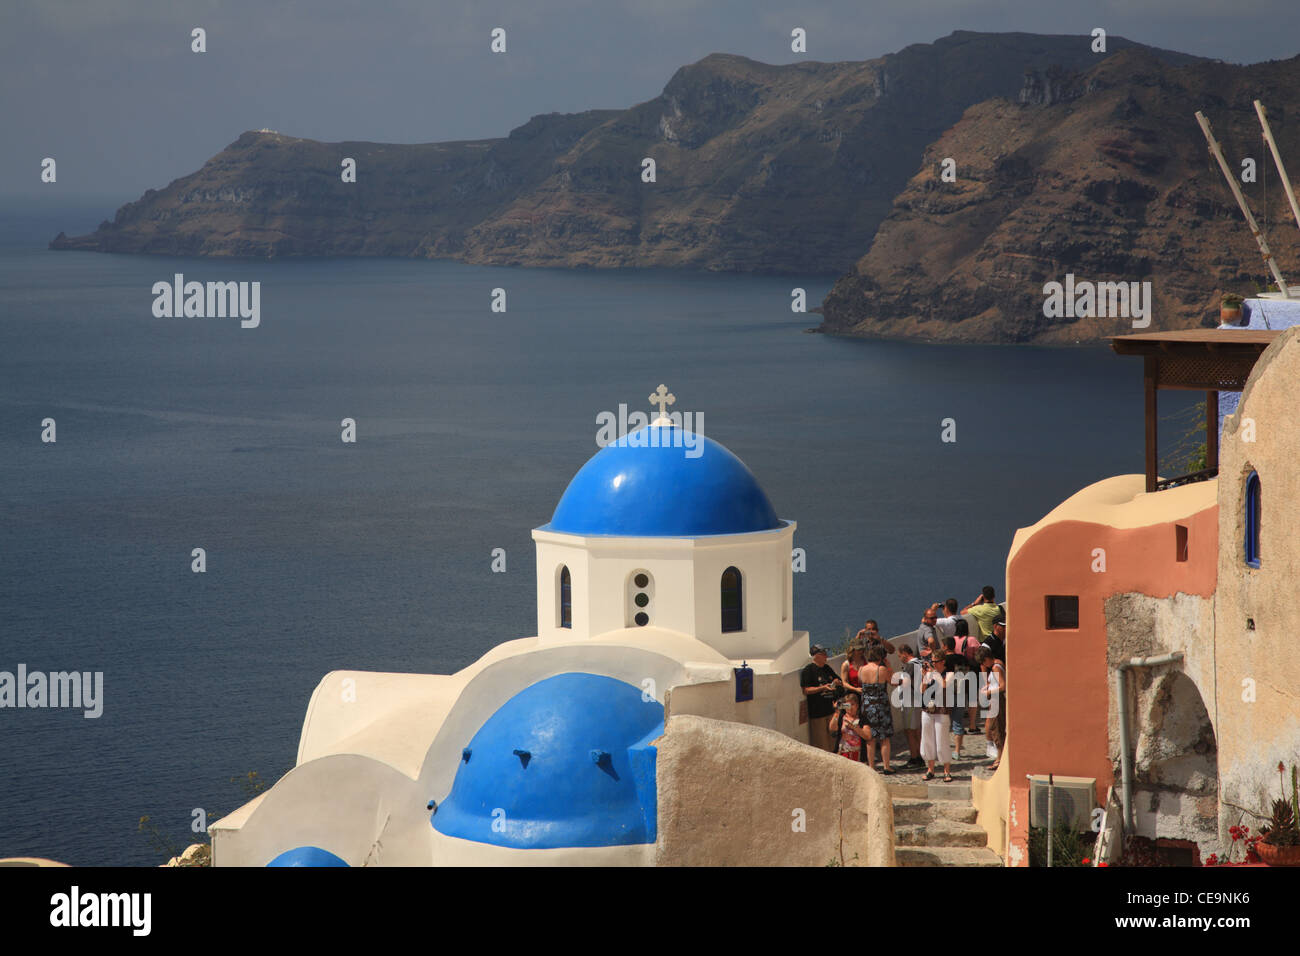 Blue Byzantine Greek Orthodox church dome with caldera in background, Oia, Santorini, Cyclades, Greece Stock Photo